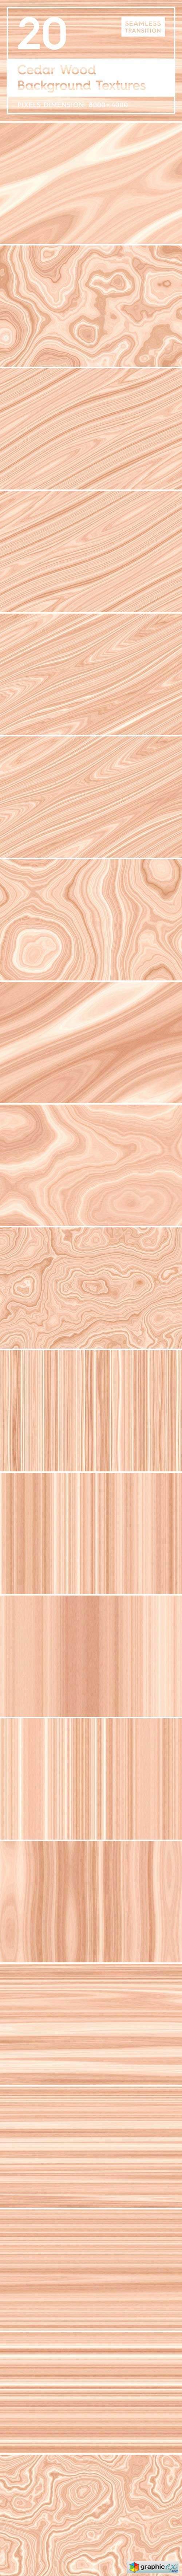 20 Cedar Wood Background Textures